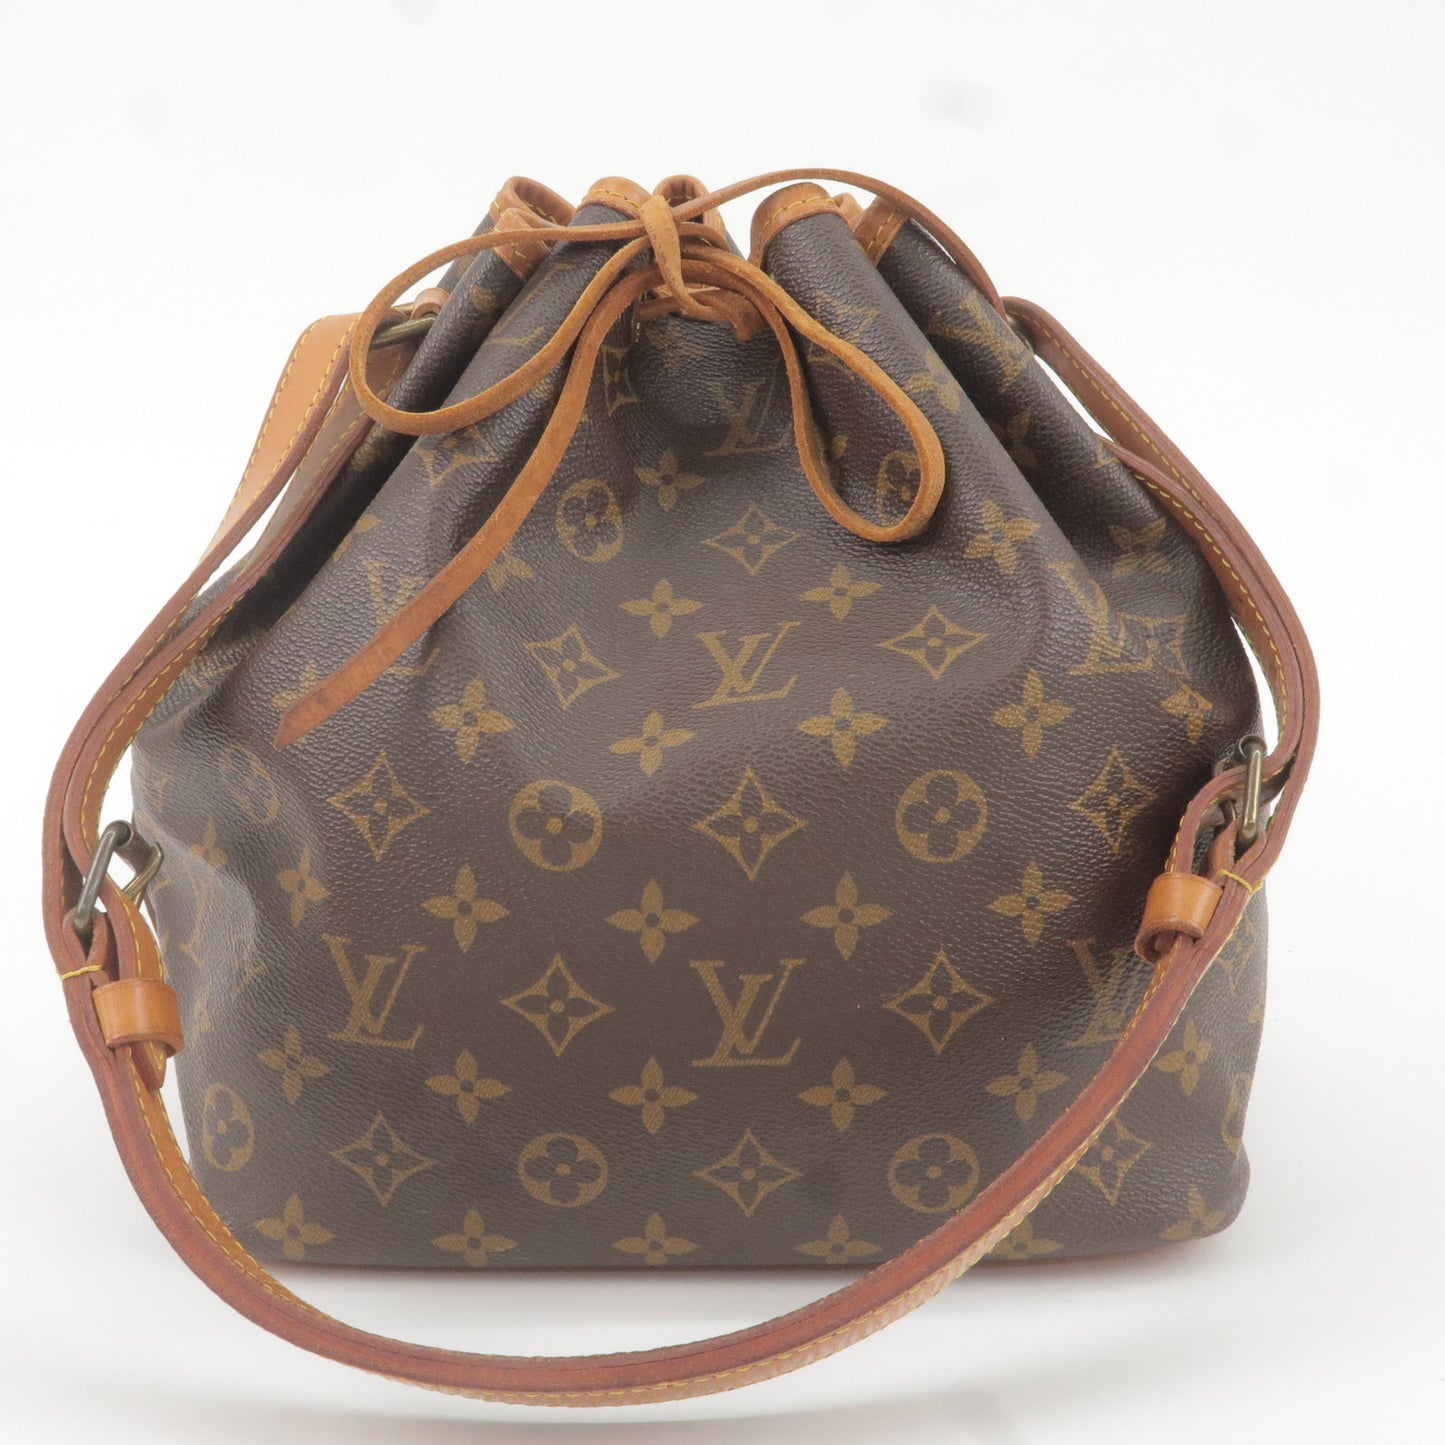 Louis Vuitton Greenwich Bag Review 2015 